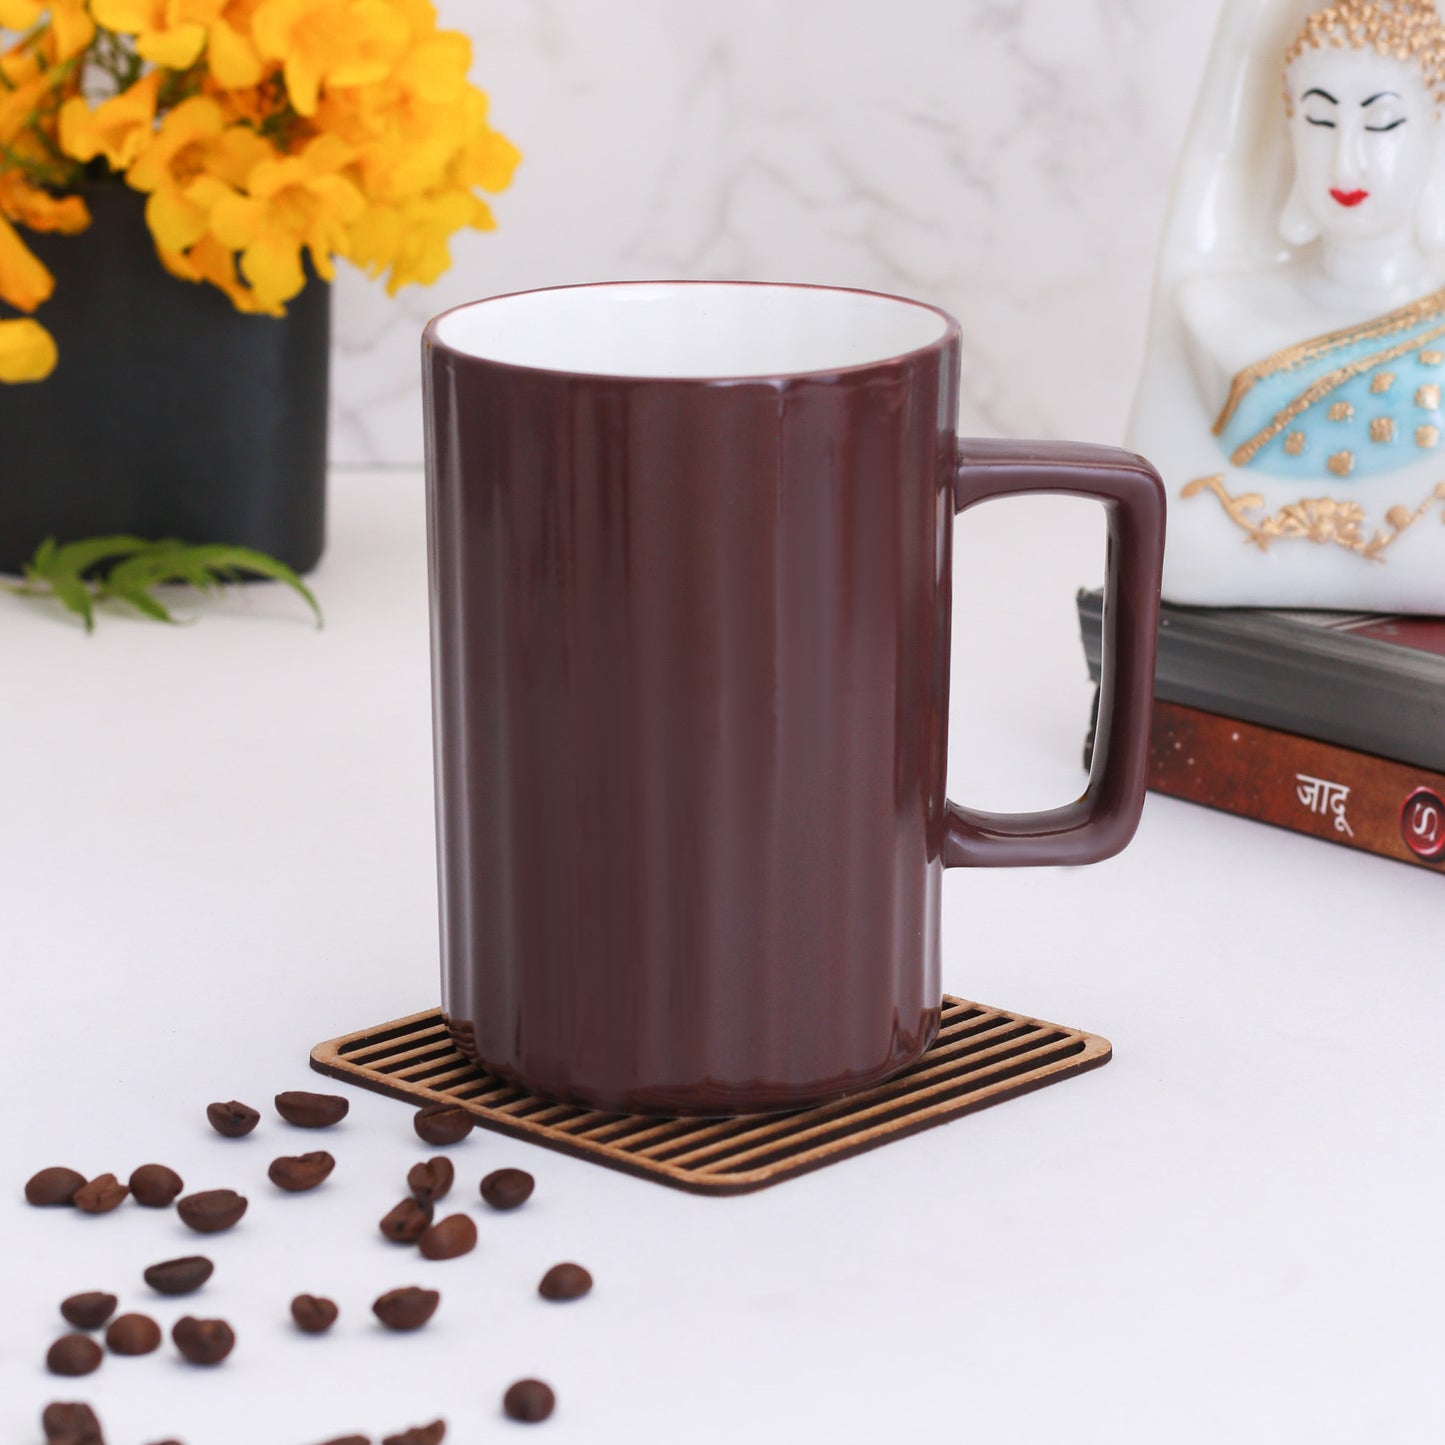 Ritz Creme Coffee & Milk Mug, 330ml, 1 Piece (R|1) - Clay Craft India